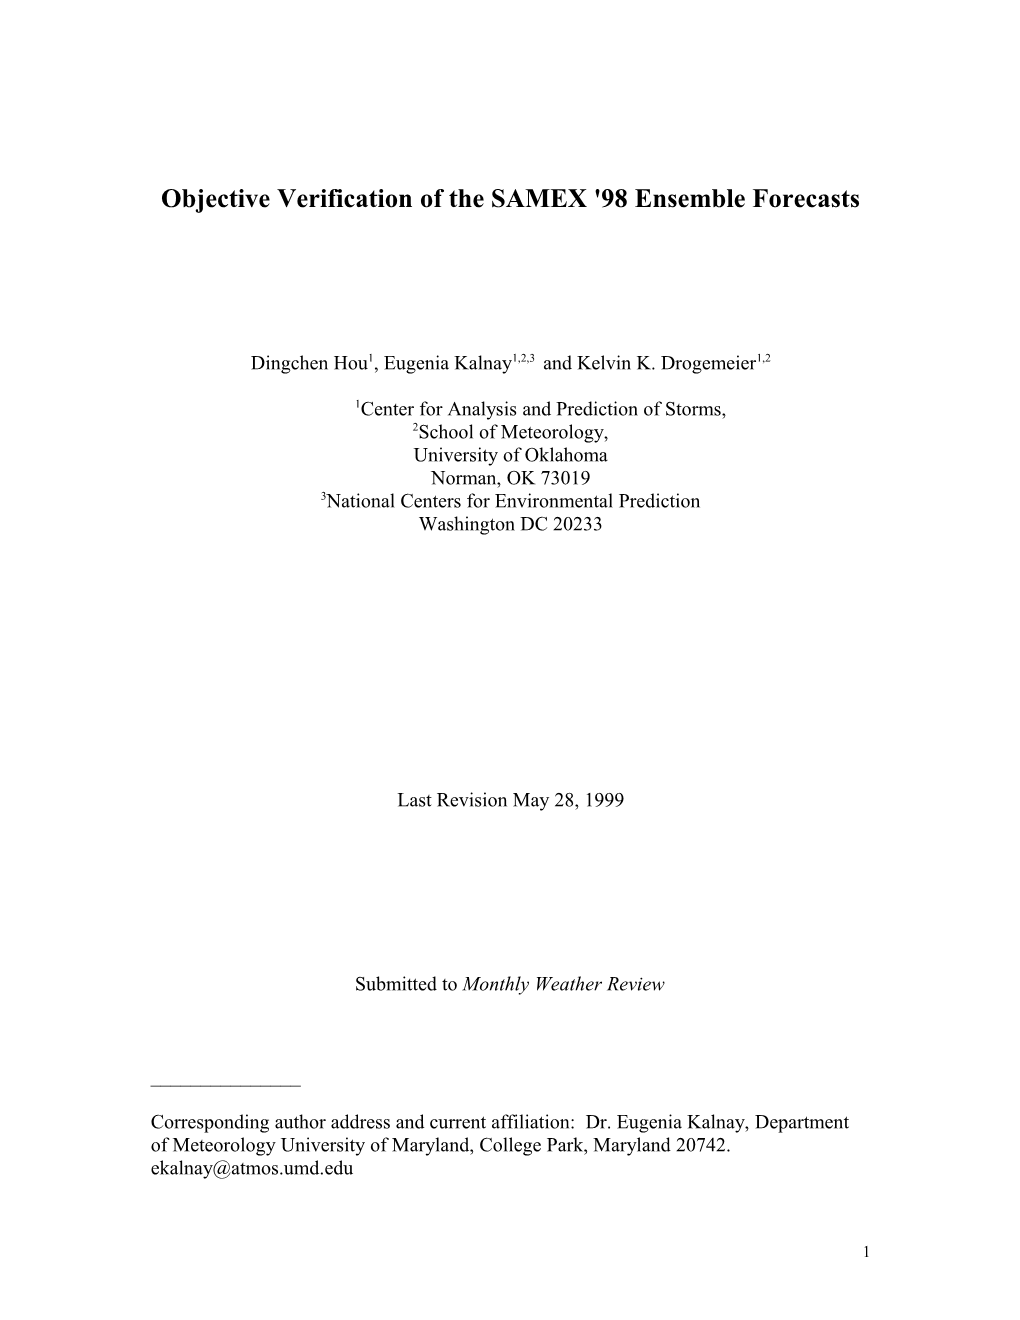 Objective Verification of the SAMEX Ensemble Forecast